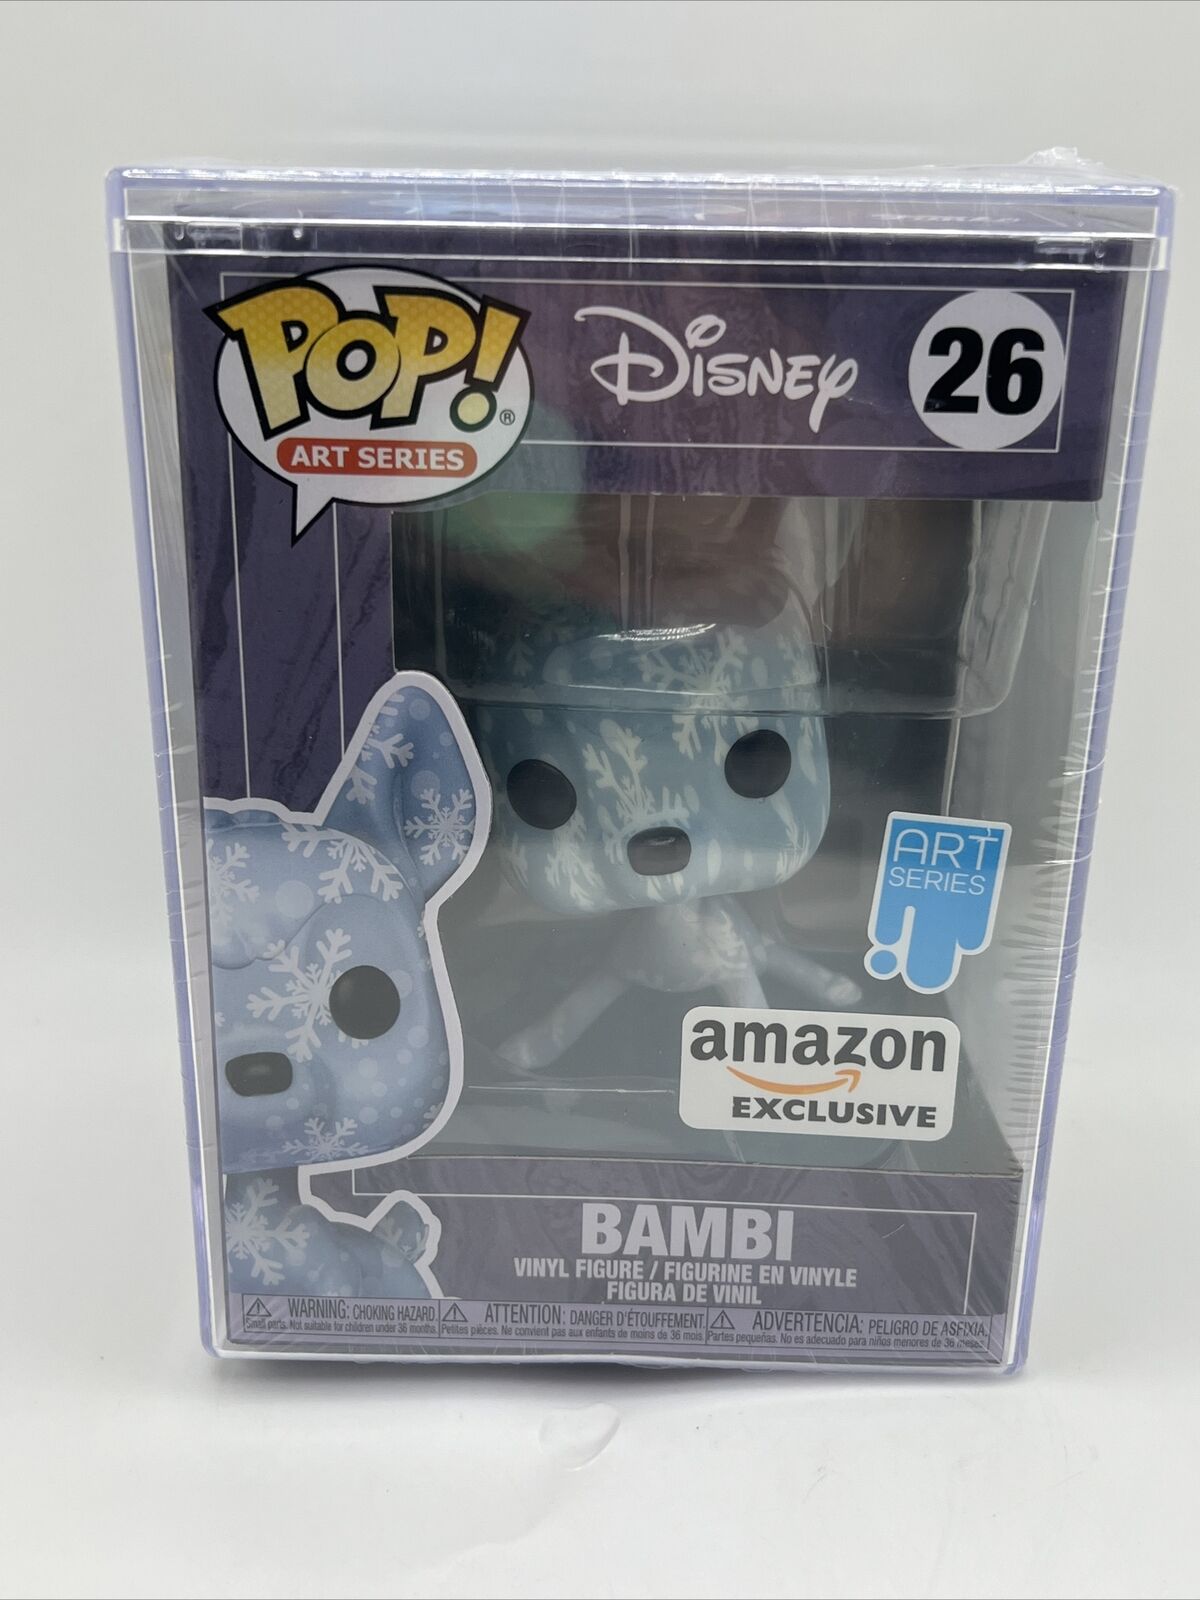 Funko Pop Disney Bambi Art Series #26 Amazon Exclusive Factory Sealed